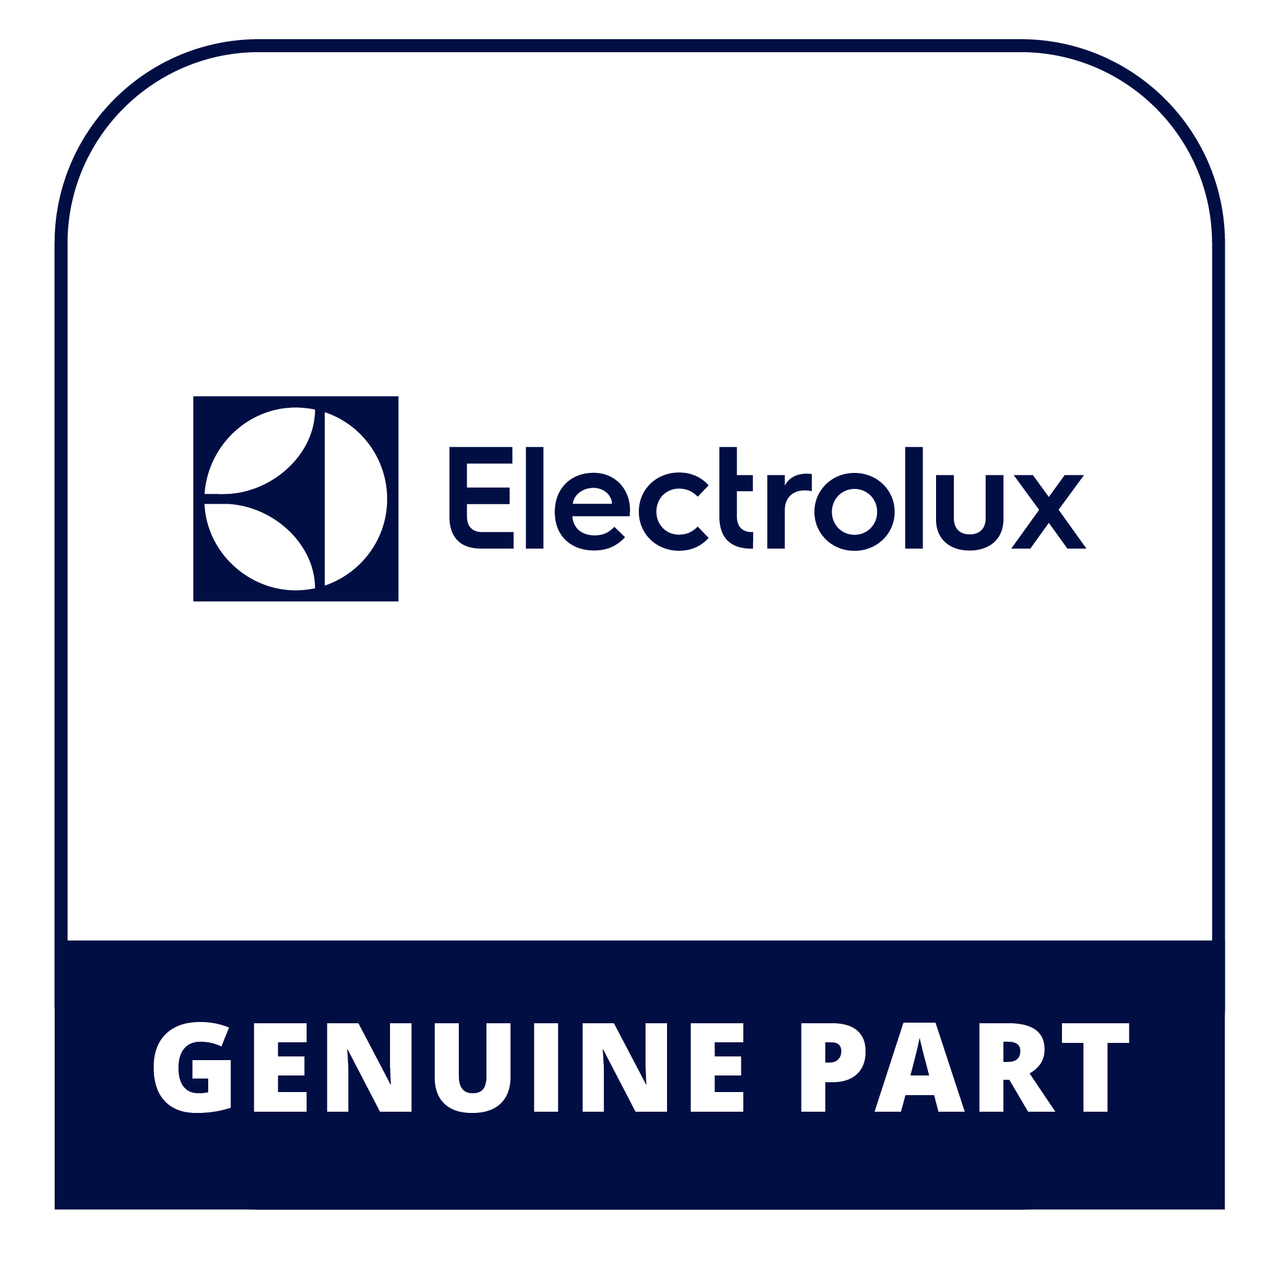 Frigidaire - Electrolux 5303918701 Control Box Kit - Genuine Electrolux Part